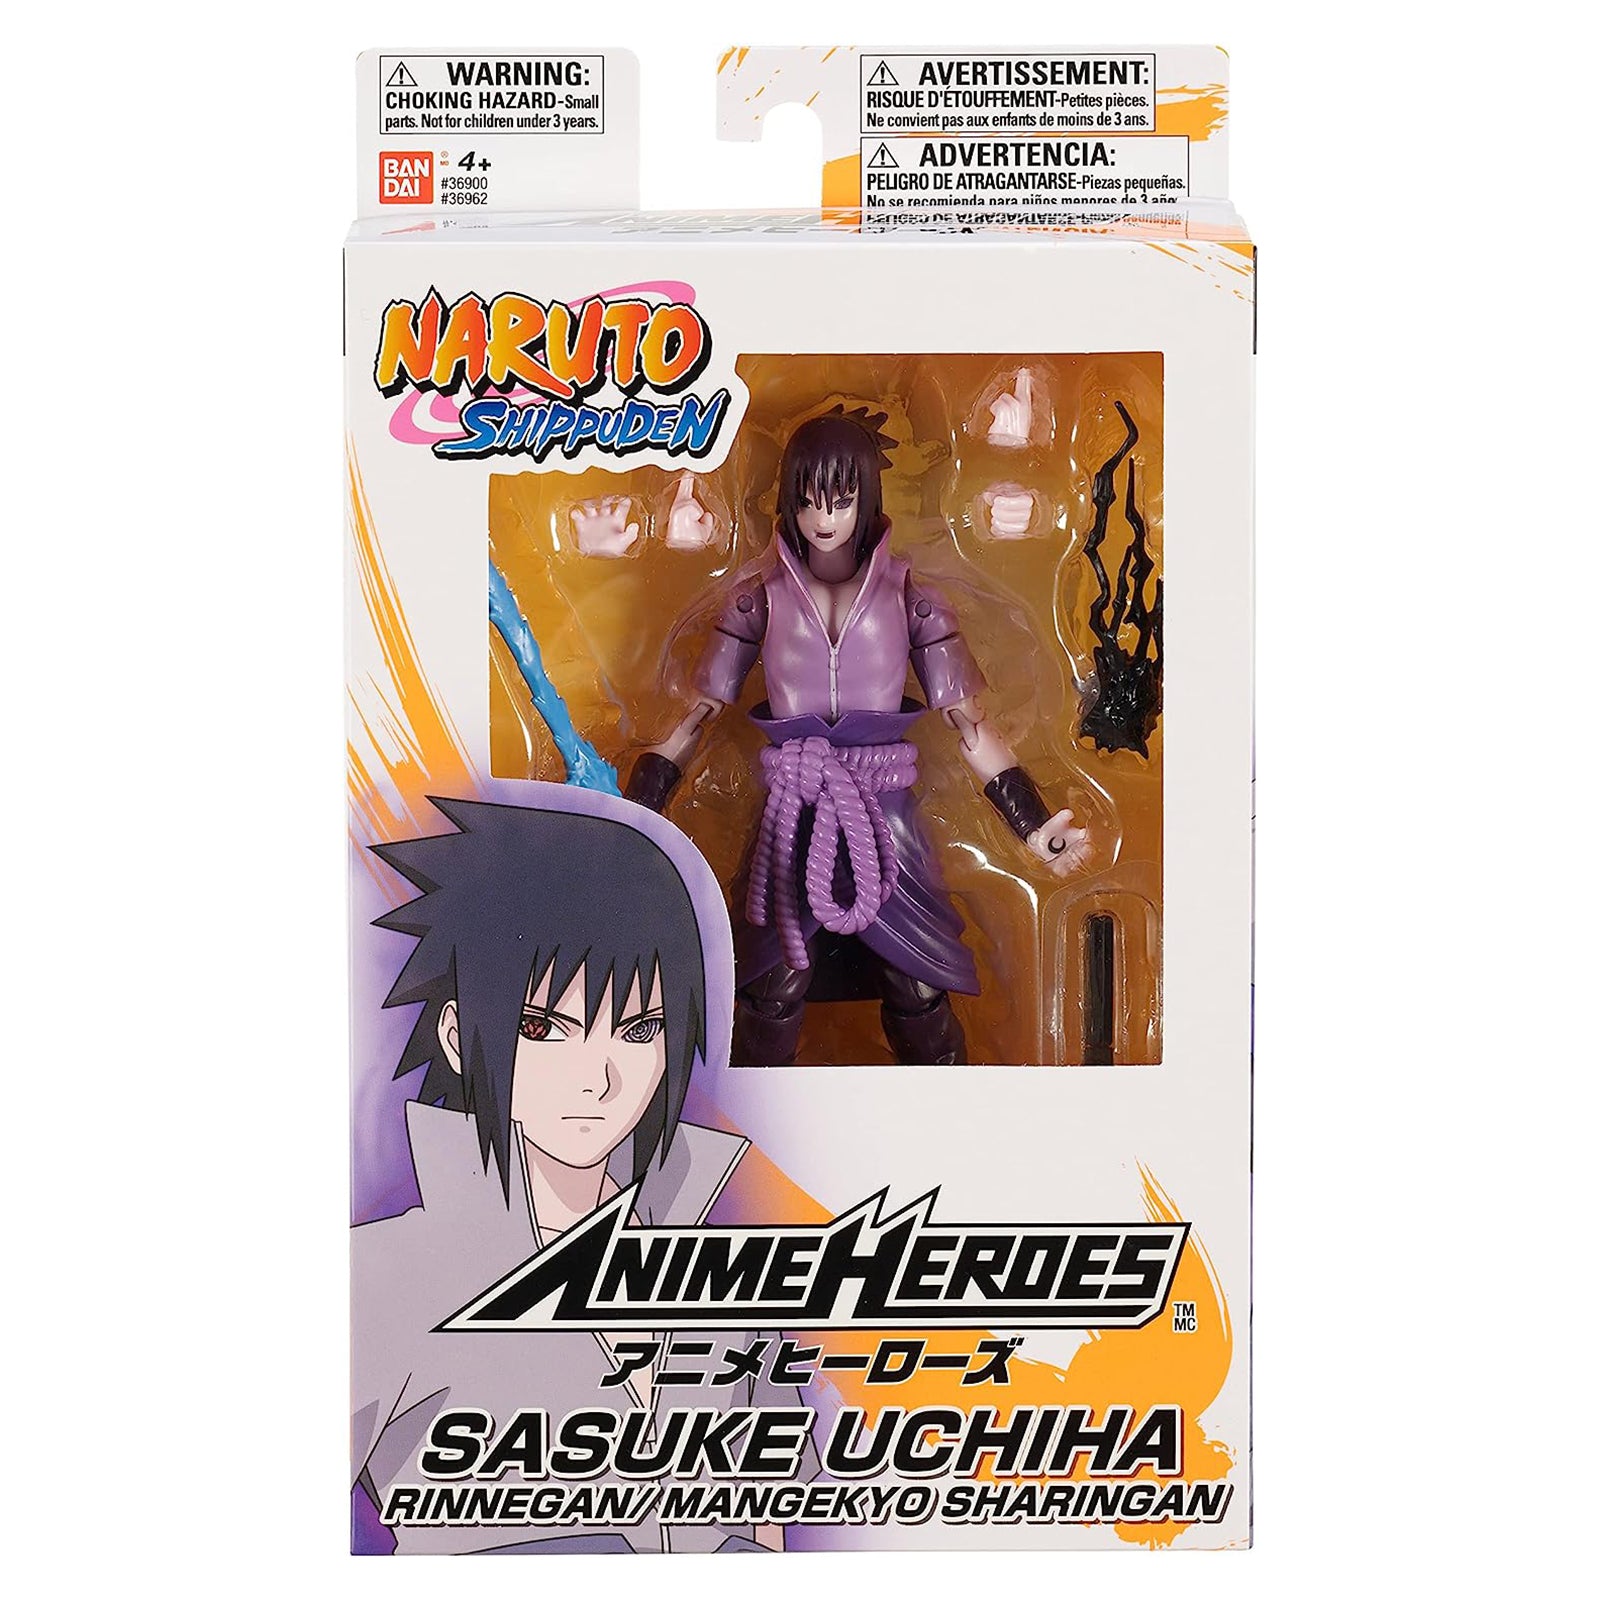 SDCC 2020 Exclusive - Naruto Shippuden Anime Heroes Itachi & Sasuke Uchiha  Figure 2-Pack